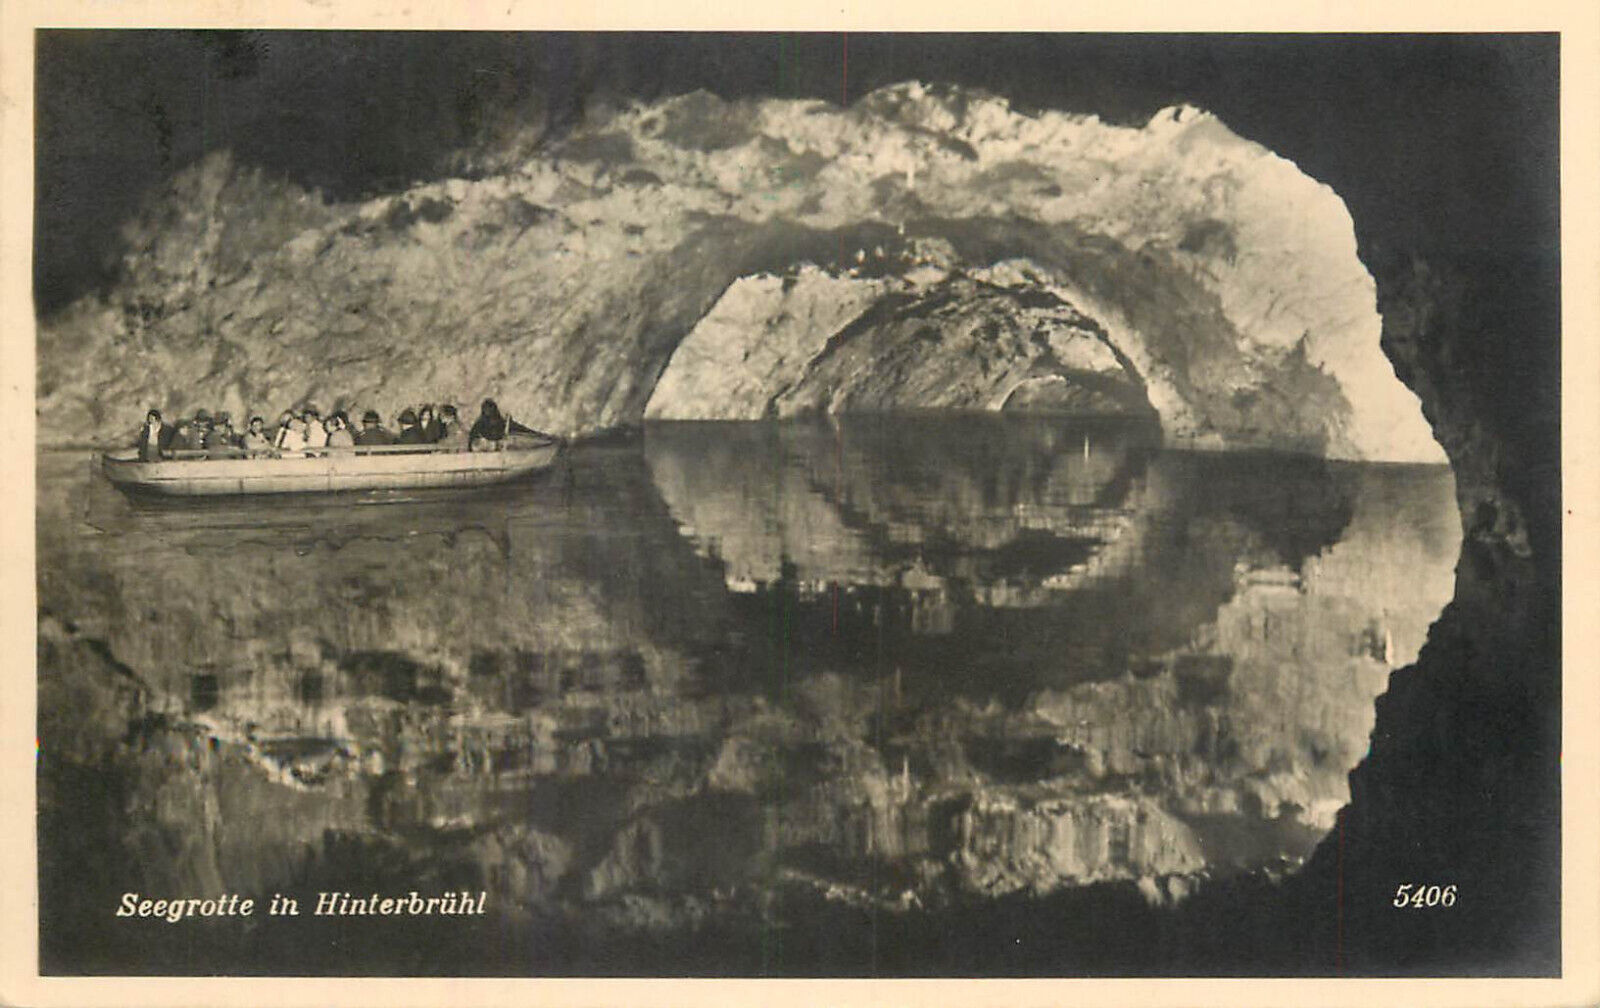 Speleology postcard cave interior Seegrotte in Hinterbluh Germany 1940